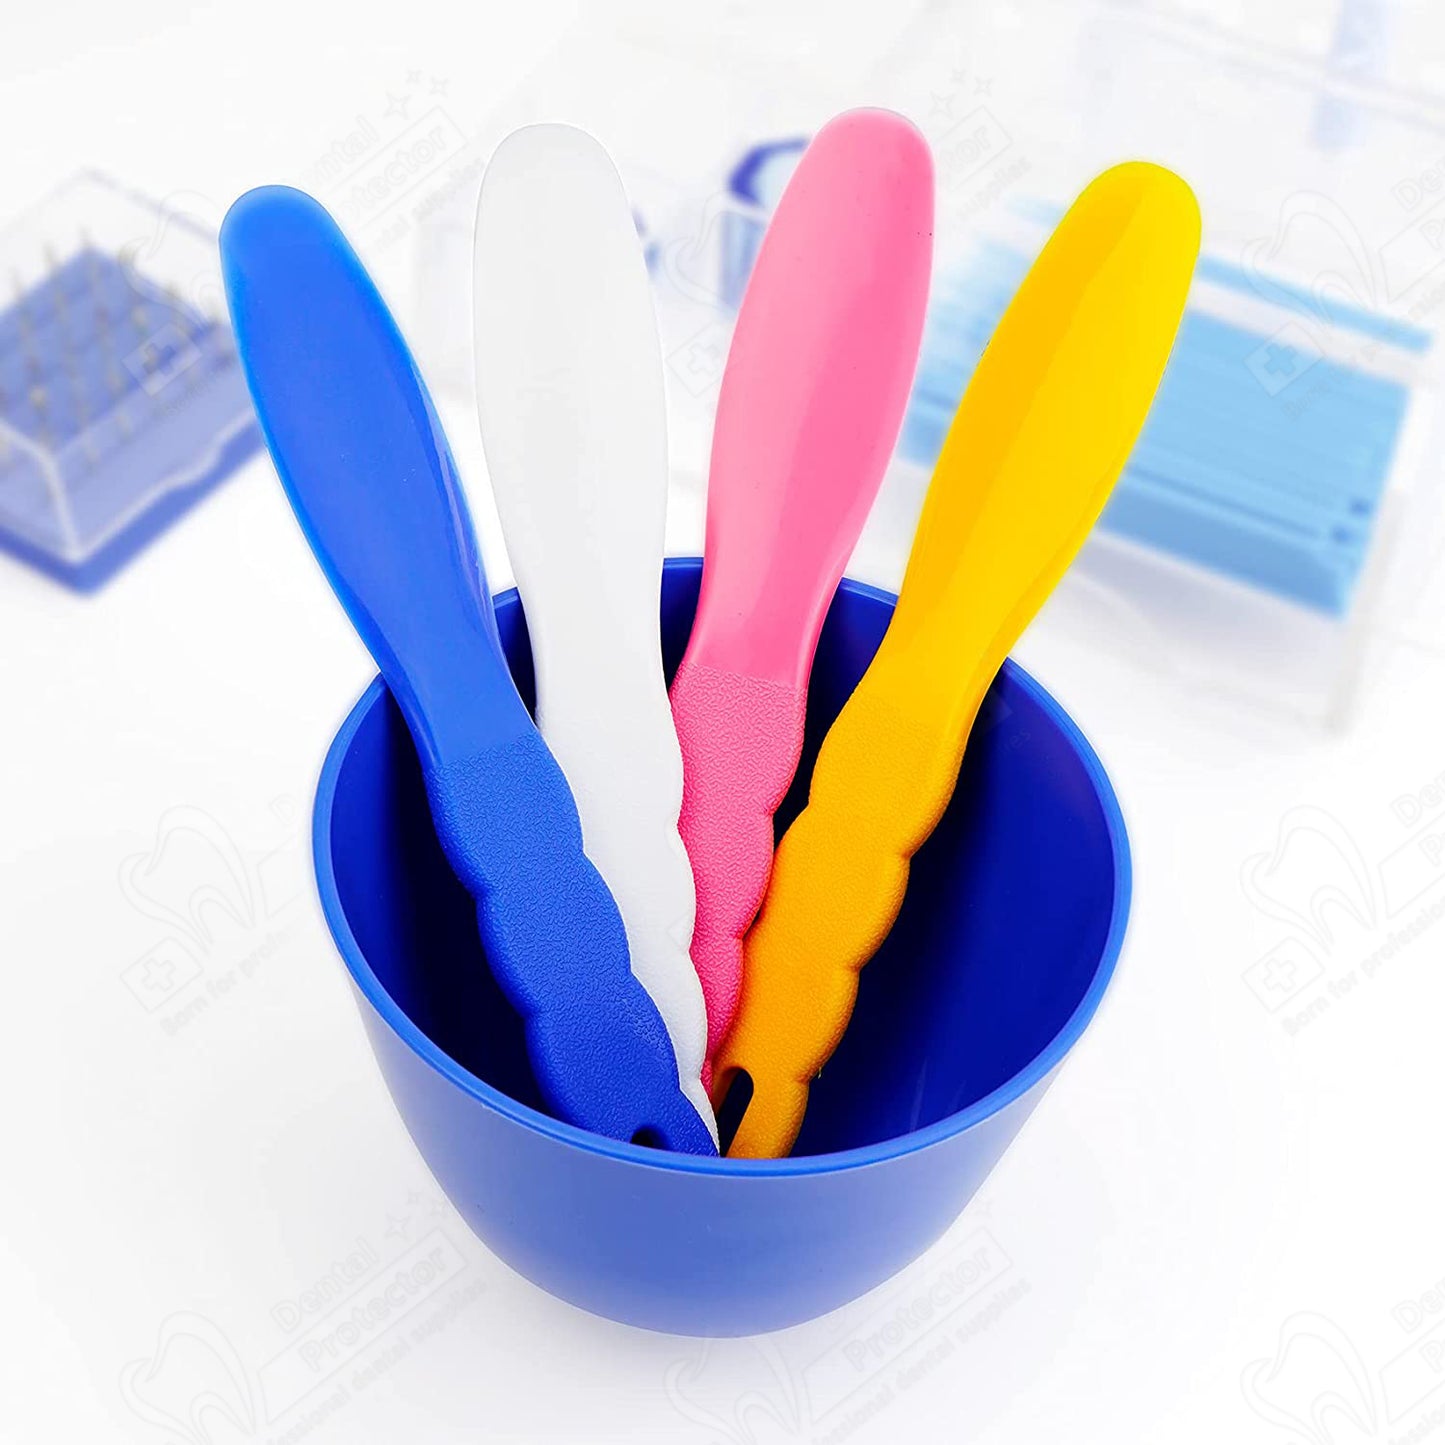 4 Pcs Dental Plastic Spatulas 7.7" for Laboratory, Dentists, Autoclavable Craft Tools for Mixing Alginate, Plaster, Stone, Impression Material - 4 Colors